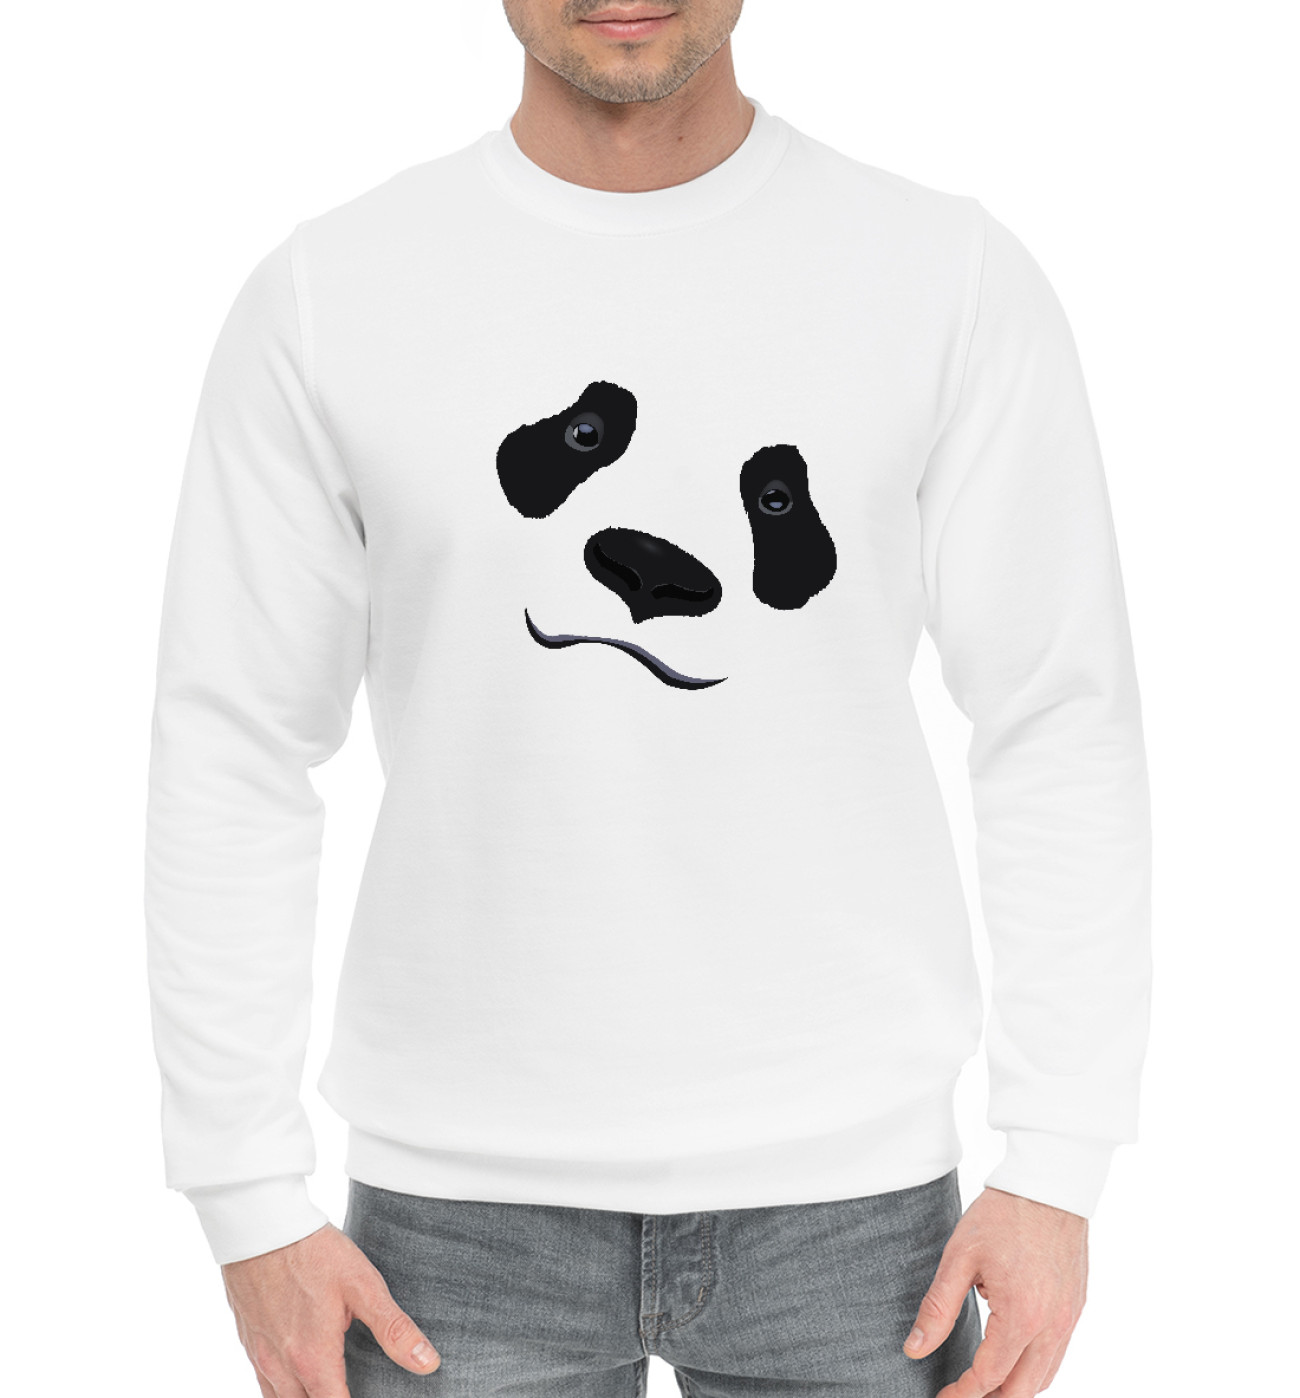 Мужской Хлопковый свитшот Взгляд панды, артикул: PAN-159399-hsw-2